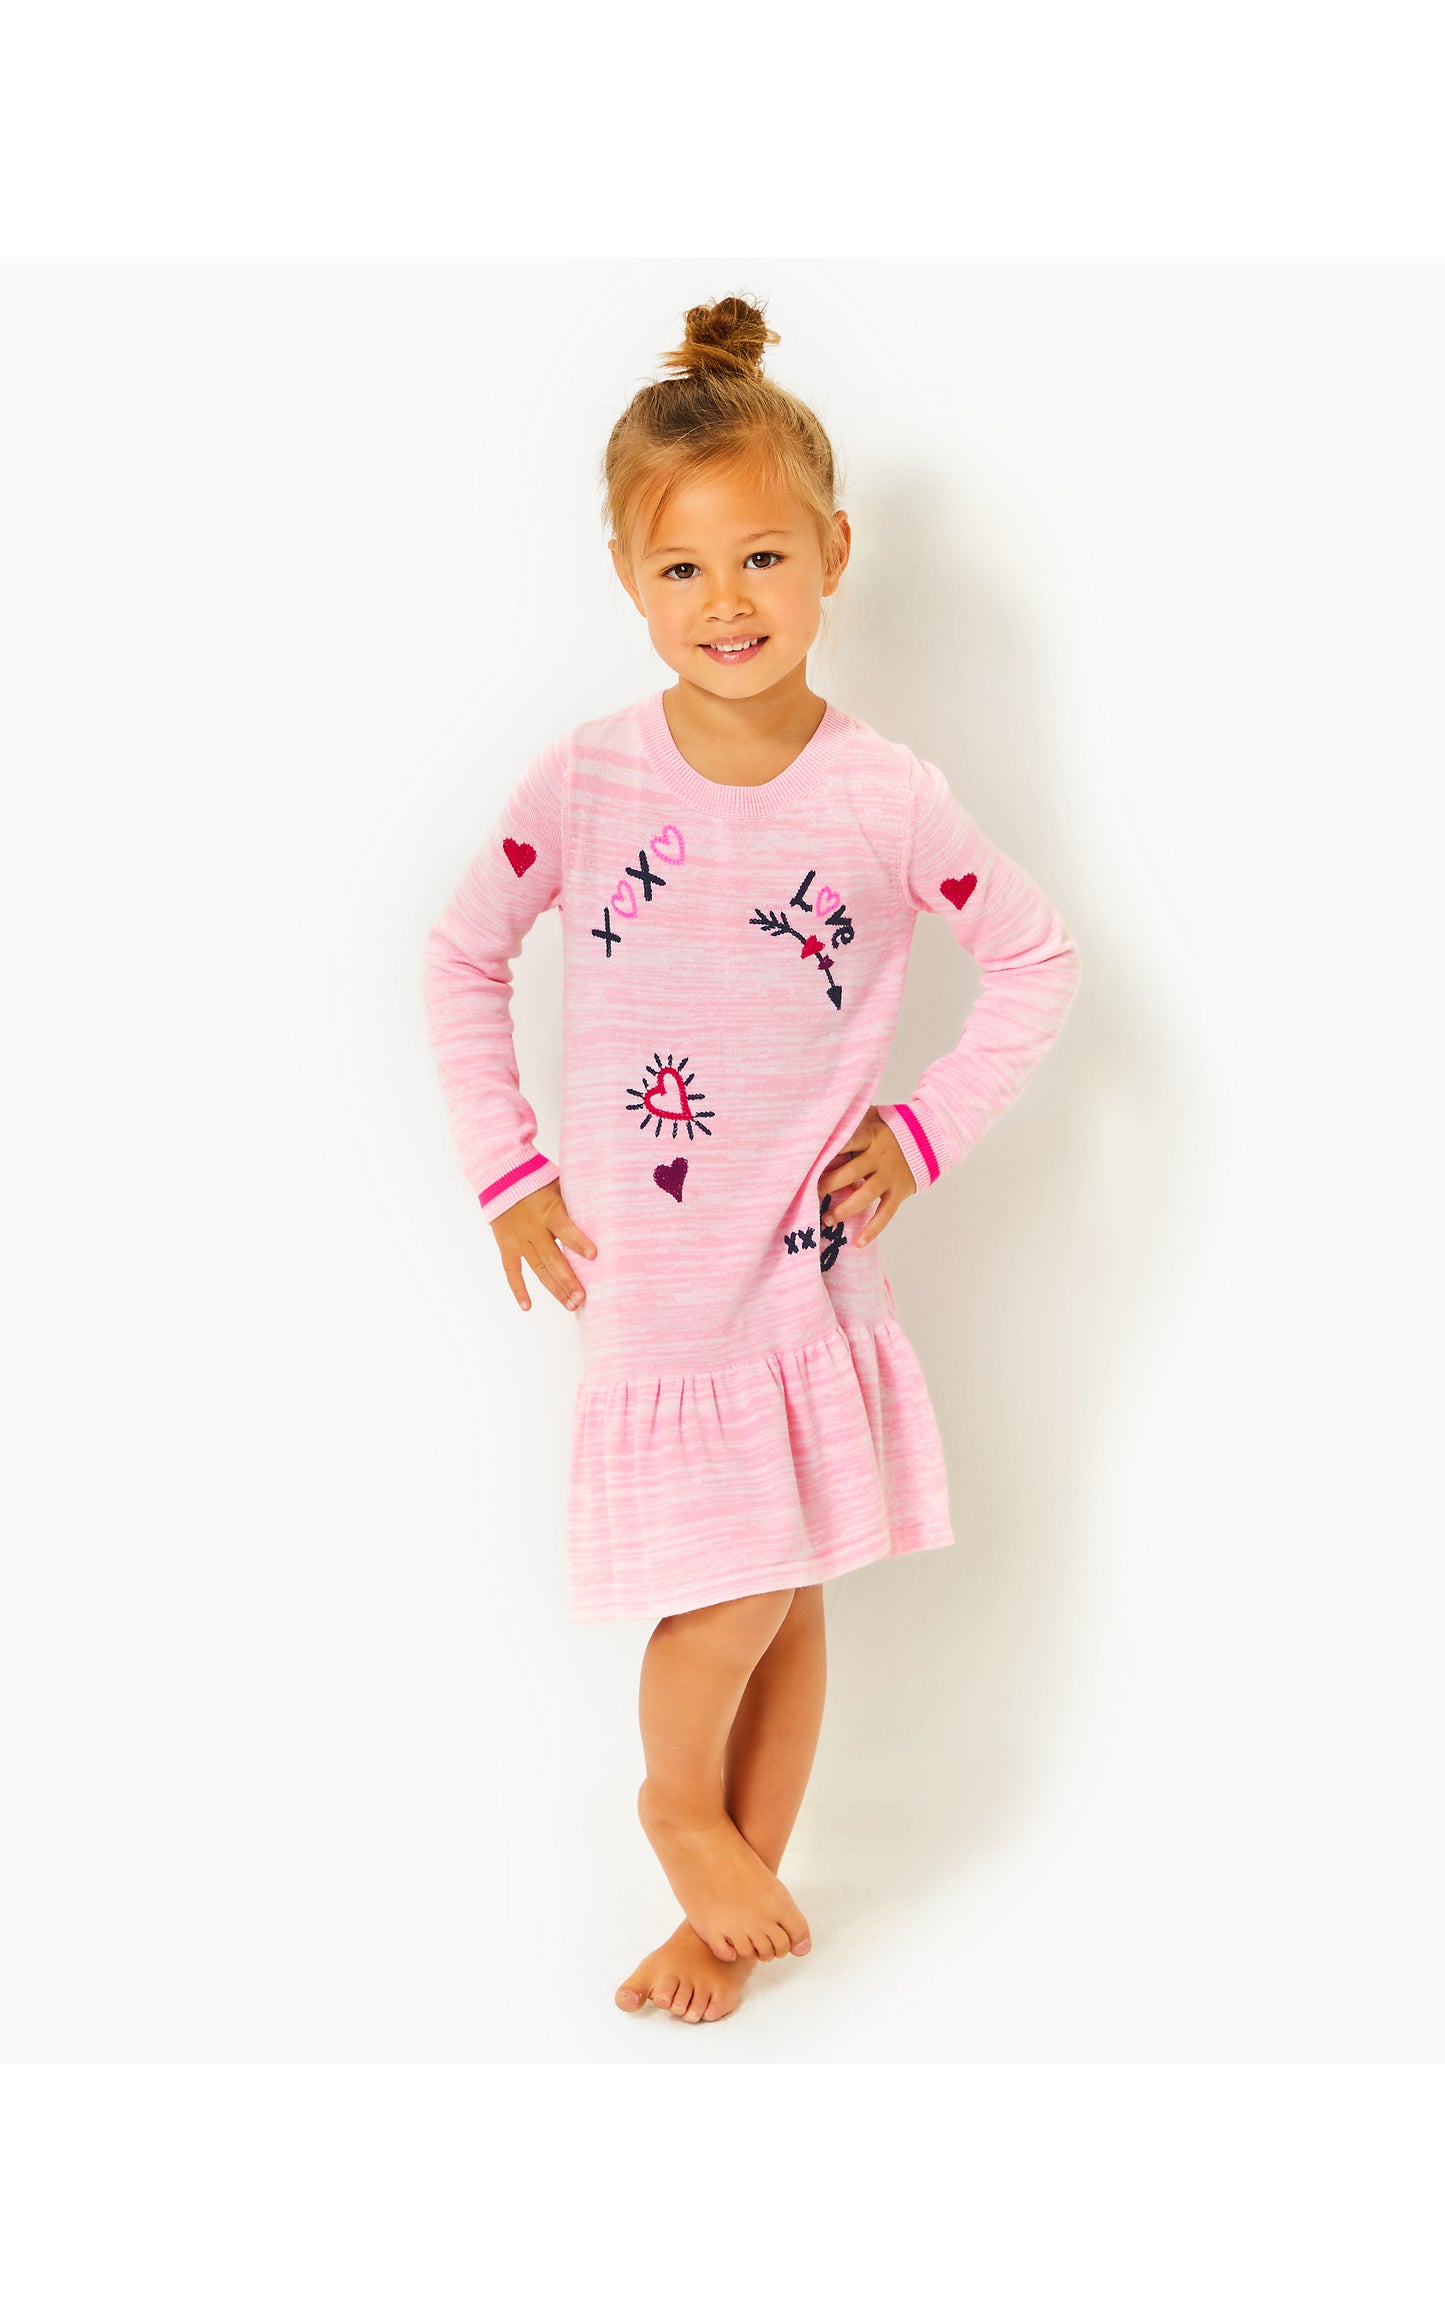 Hani Sweater Dress in Heathered Peony Pink Valentine Embroidery